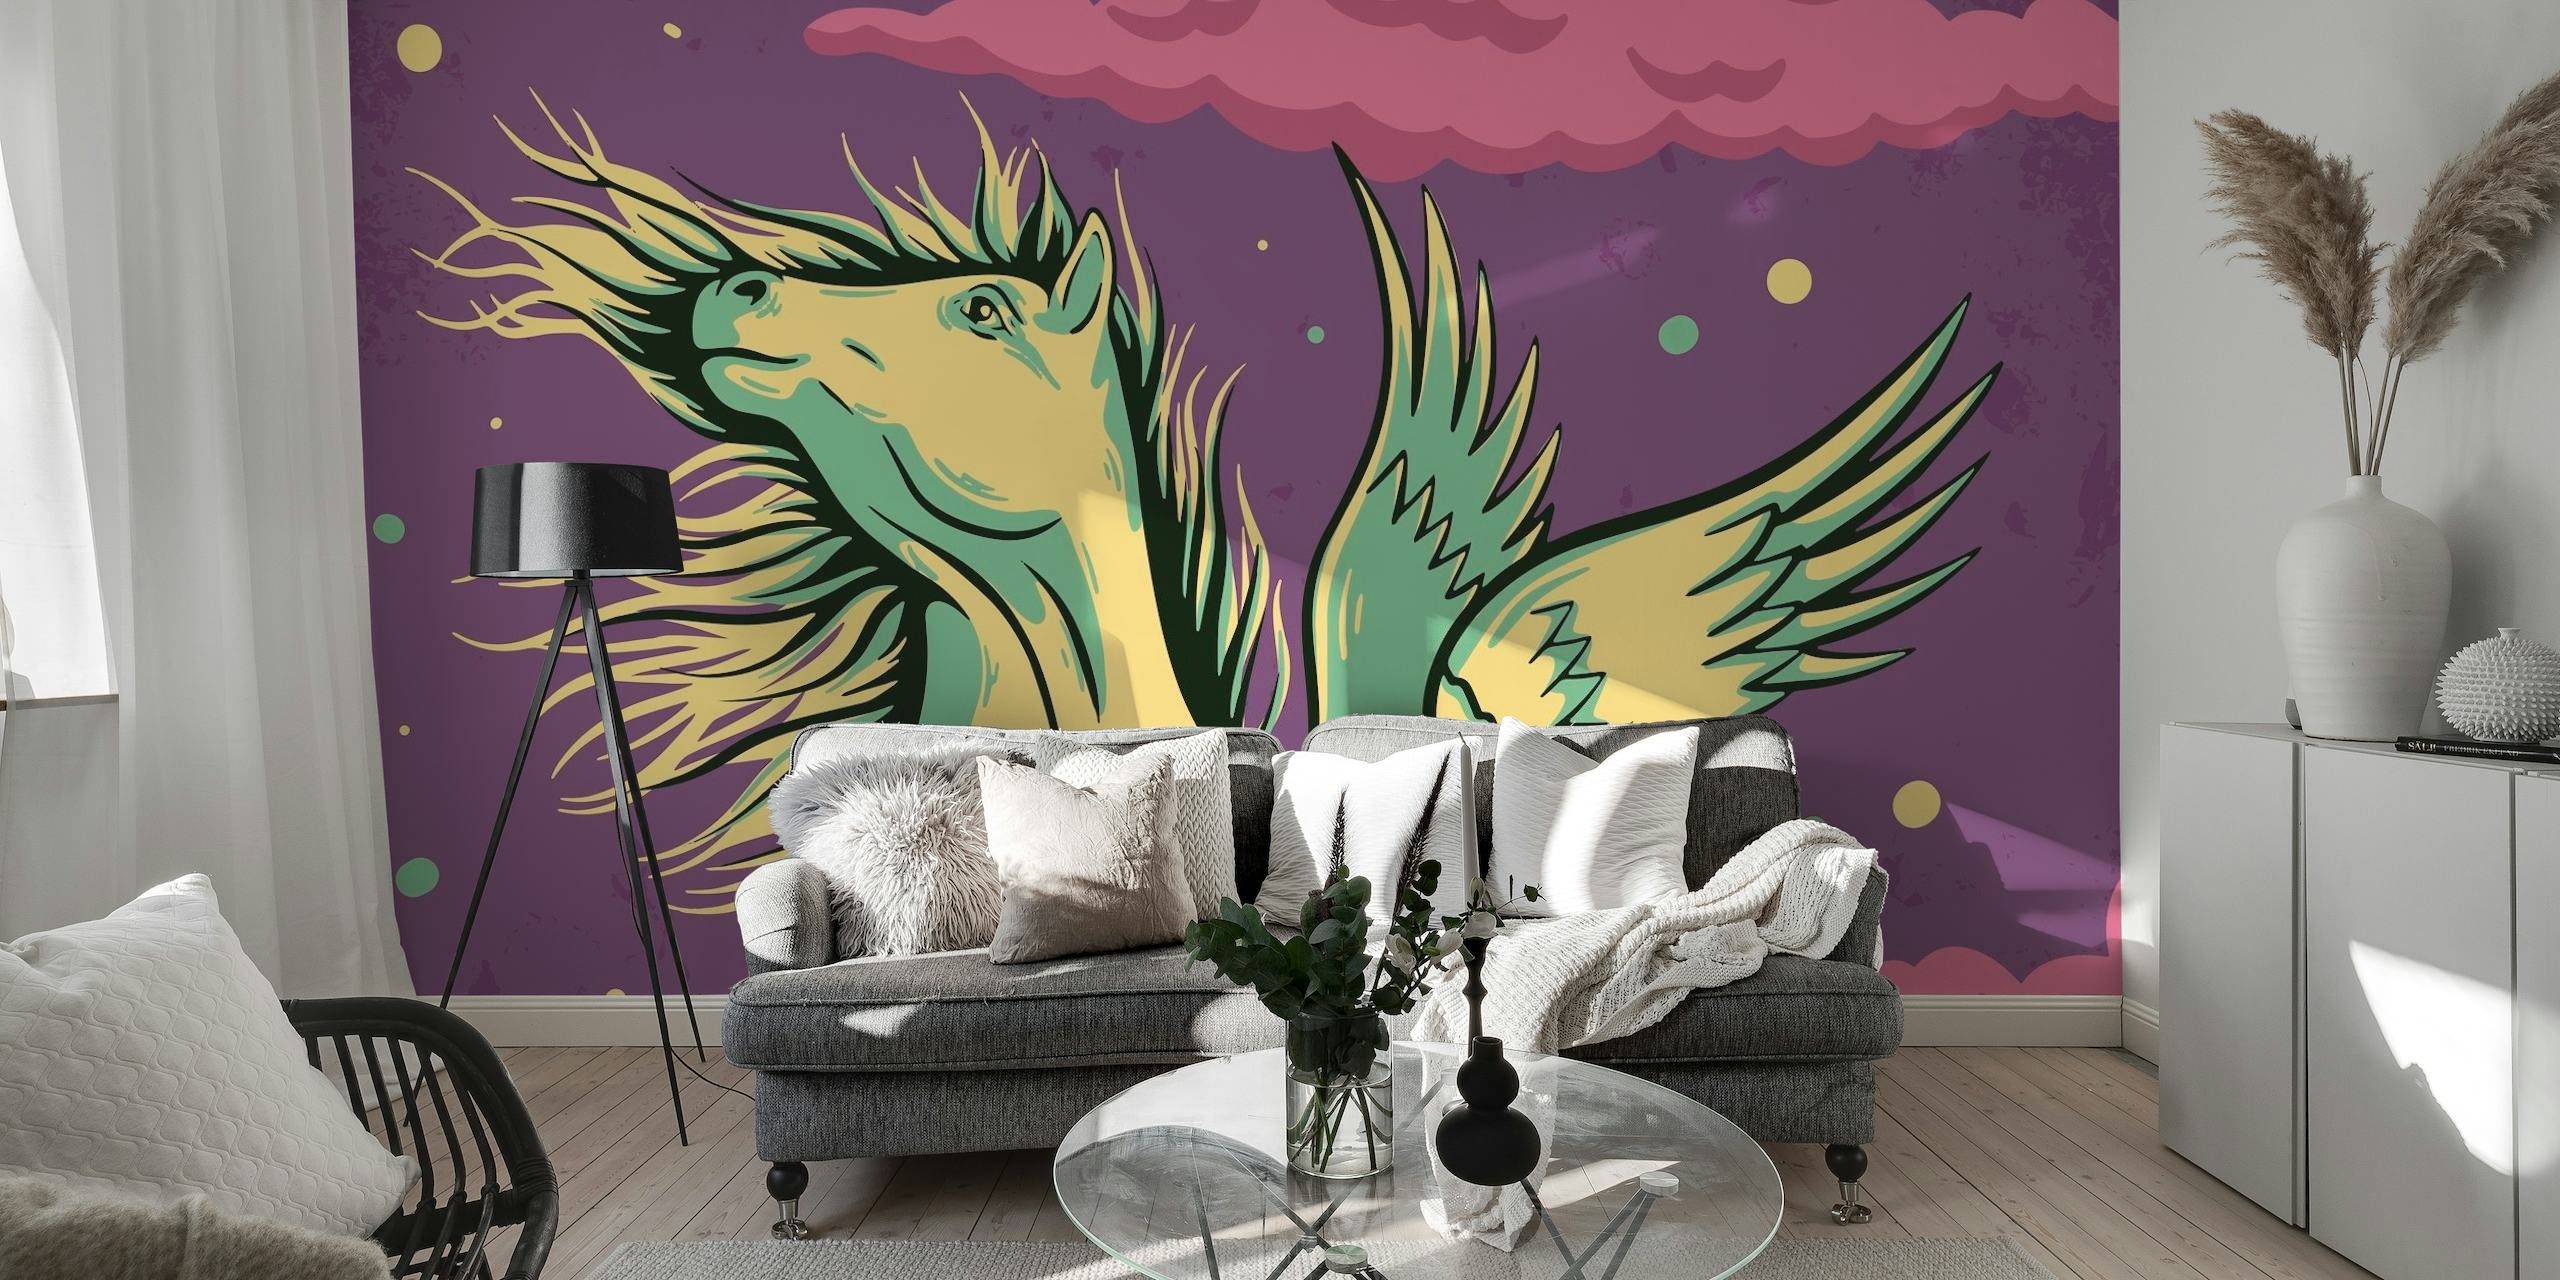 Pegasus vægmaleri med mytisk hest på en stjerneklar lilla himmel